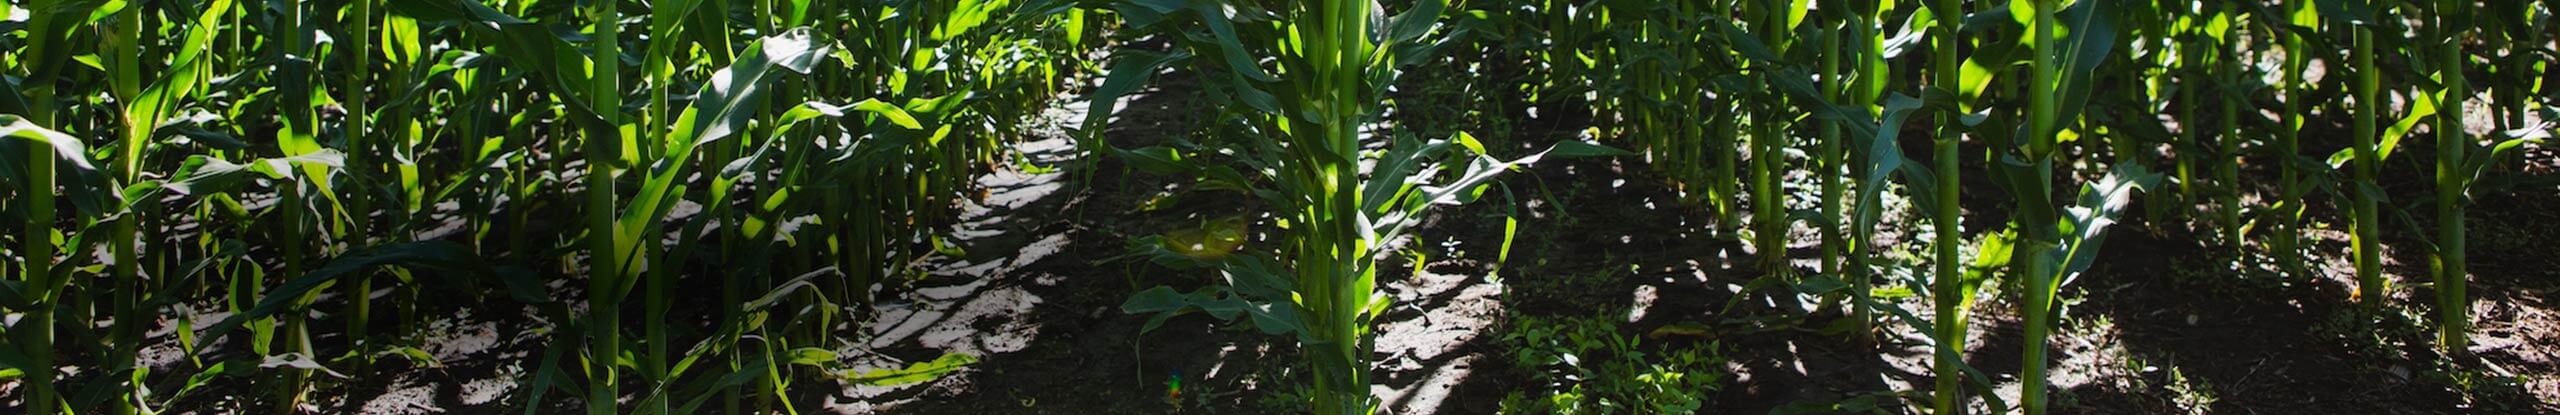 The Manitoba Corn Initiative: Economic analysis of optimal crop rotations with corn